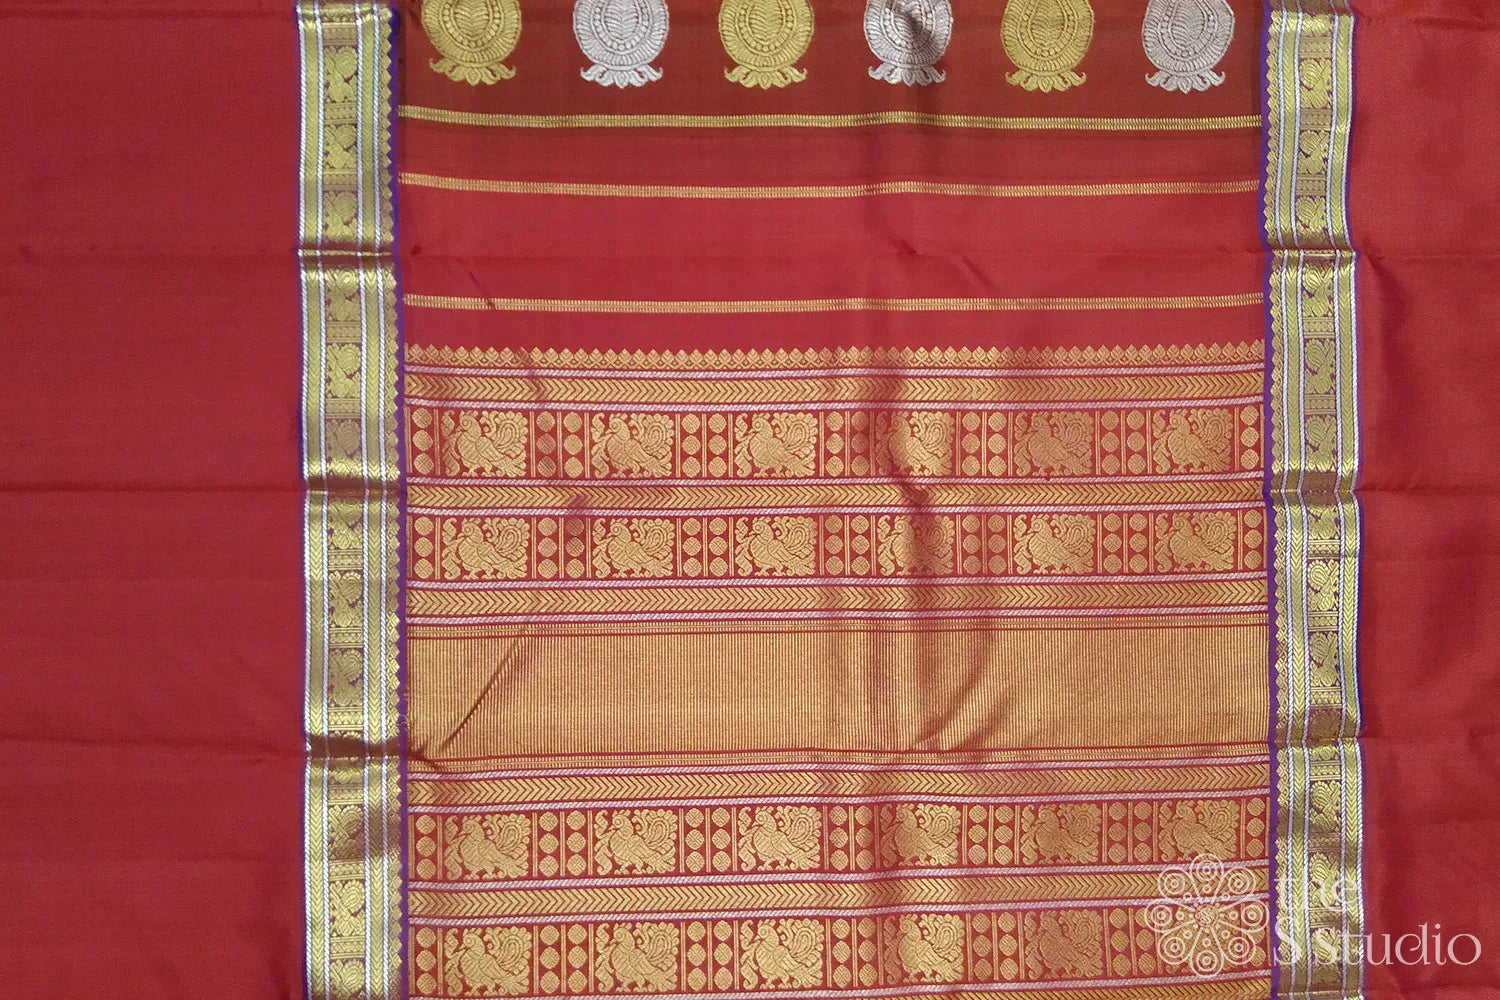 CHEAPEST SILK SAREES - Fancy Silk Sarees Below Rs 2,500 Manufacturer from  Coimbatore